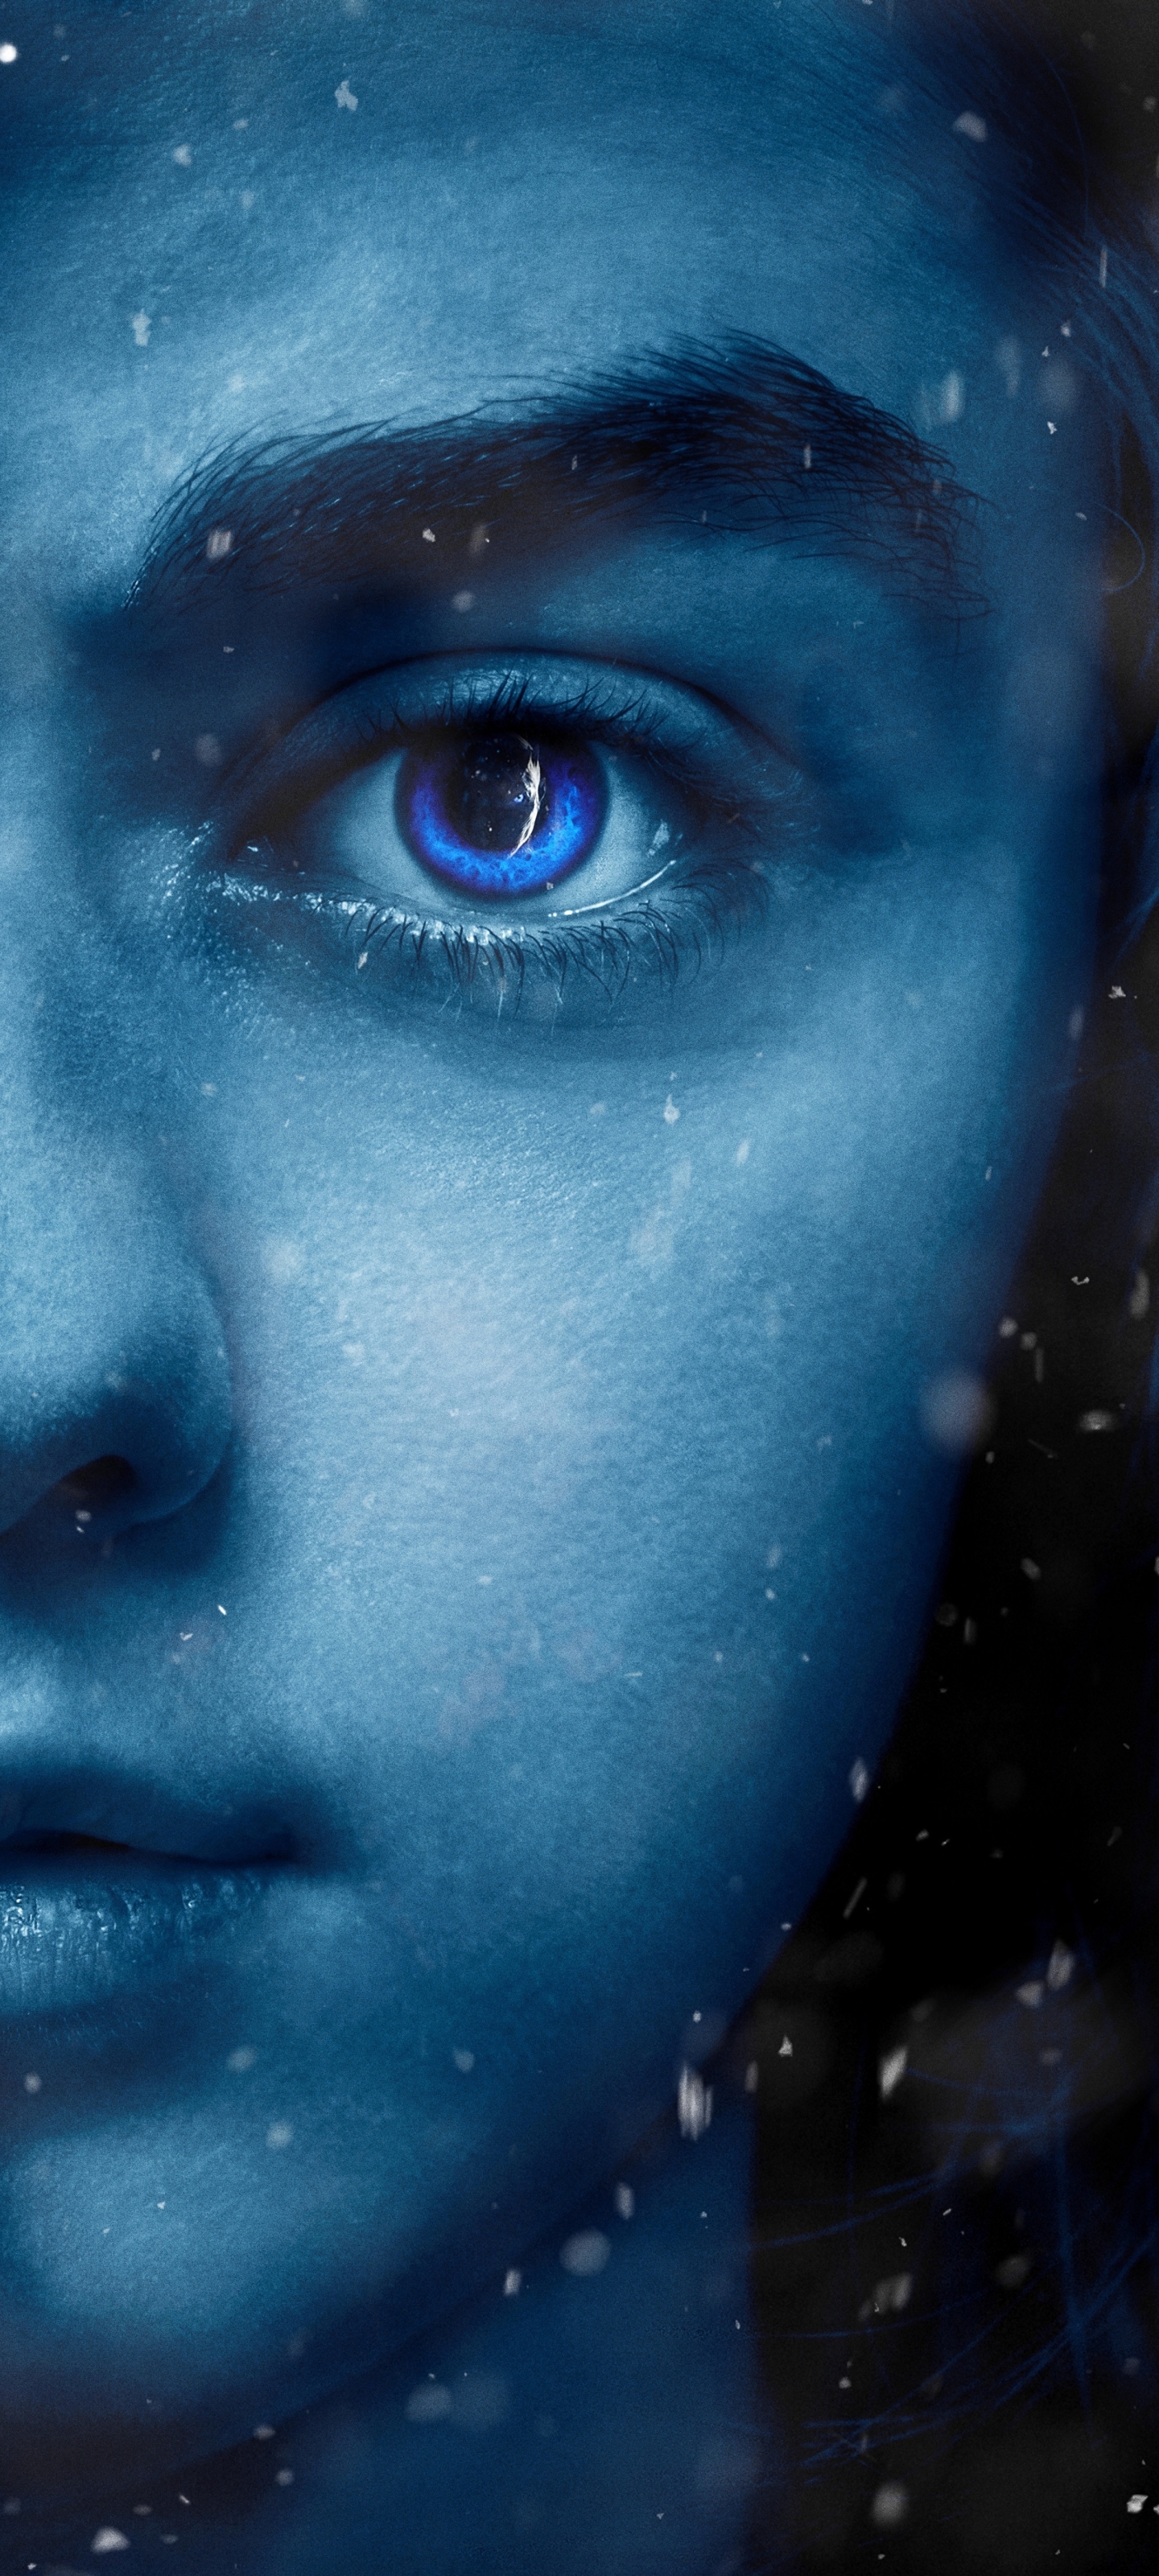 Descarga gratuita de fondo de pantalla para móvil de Juego De Tronos, Series De Televisión, Arya Stark.